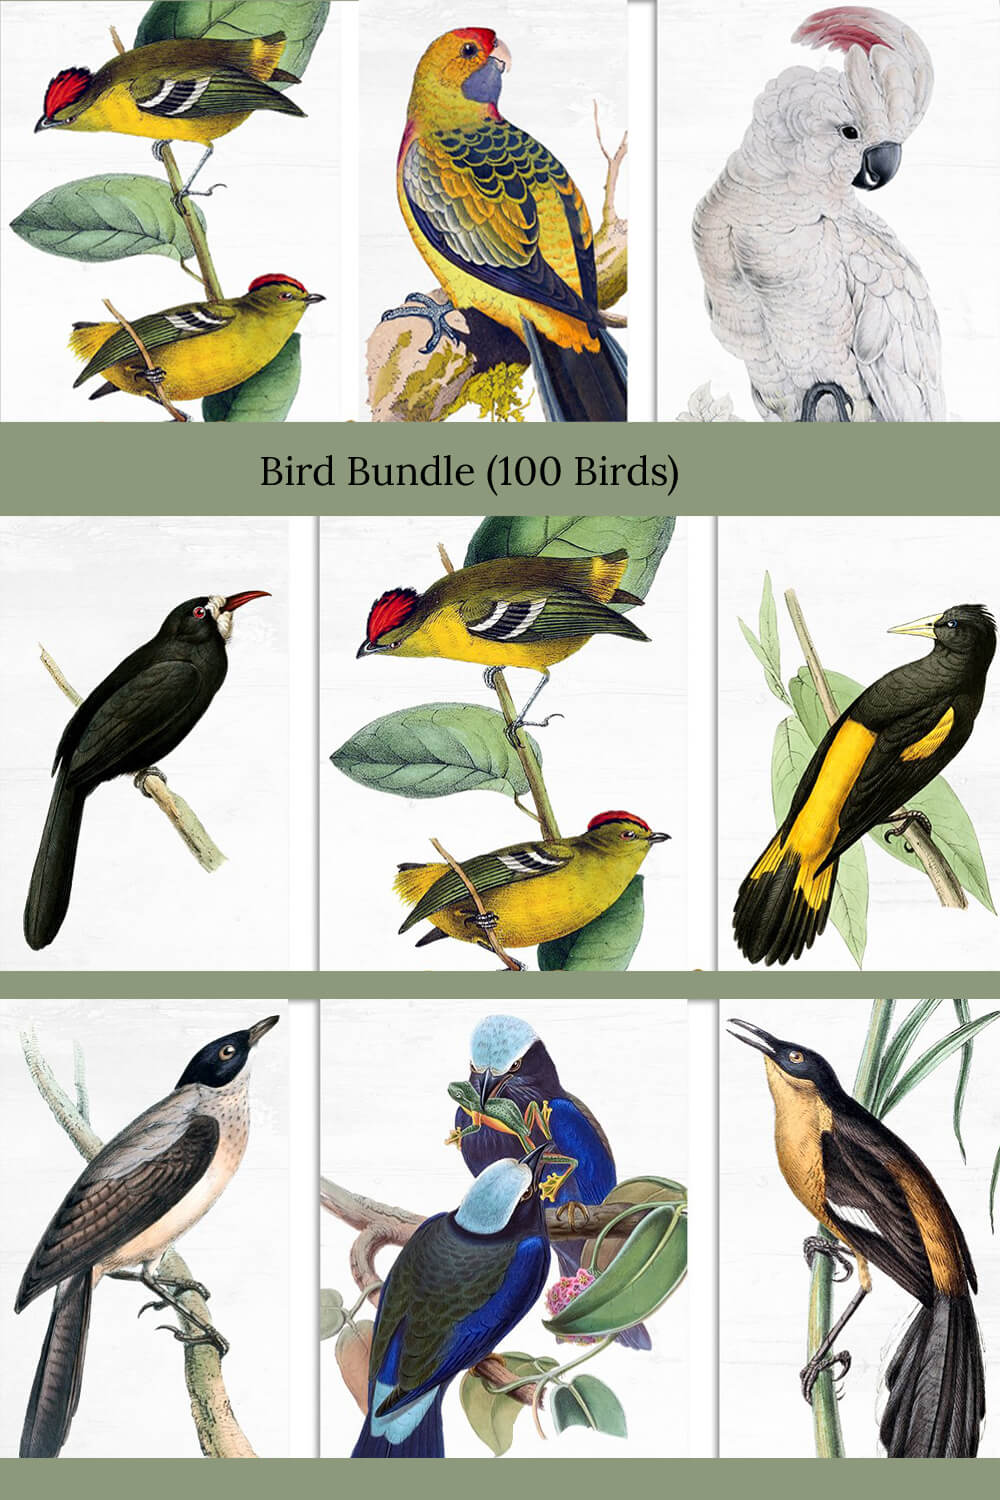 Many tropical birds and the inscription "Bird Bundle (100 Birds)".